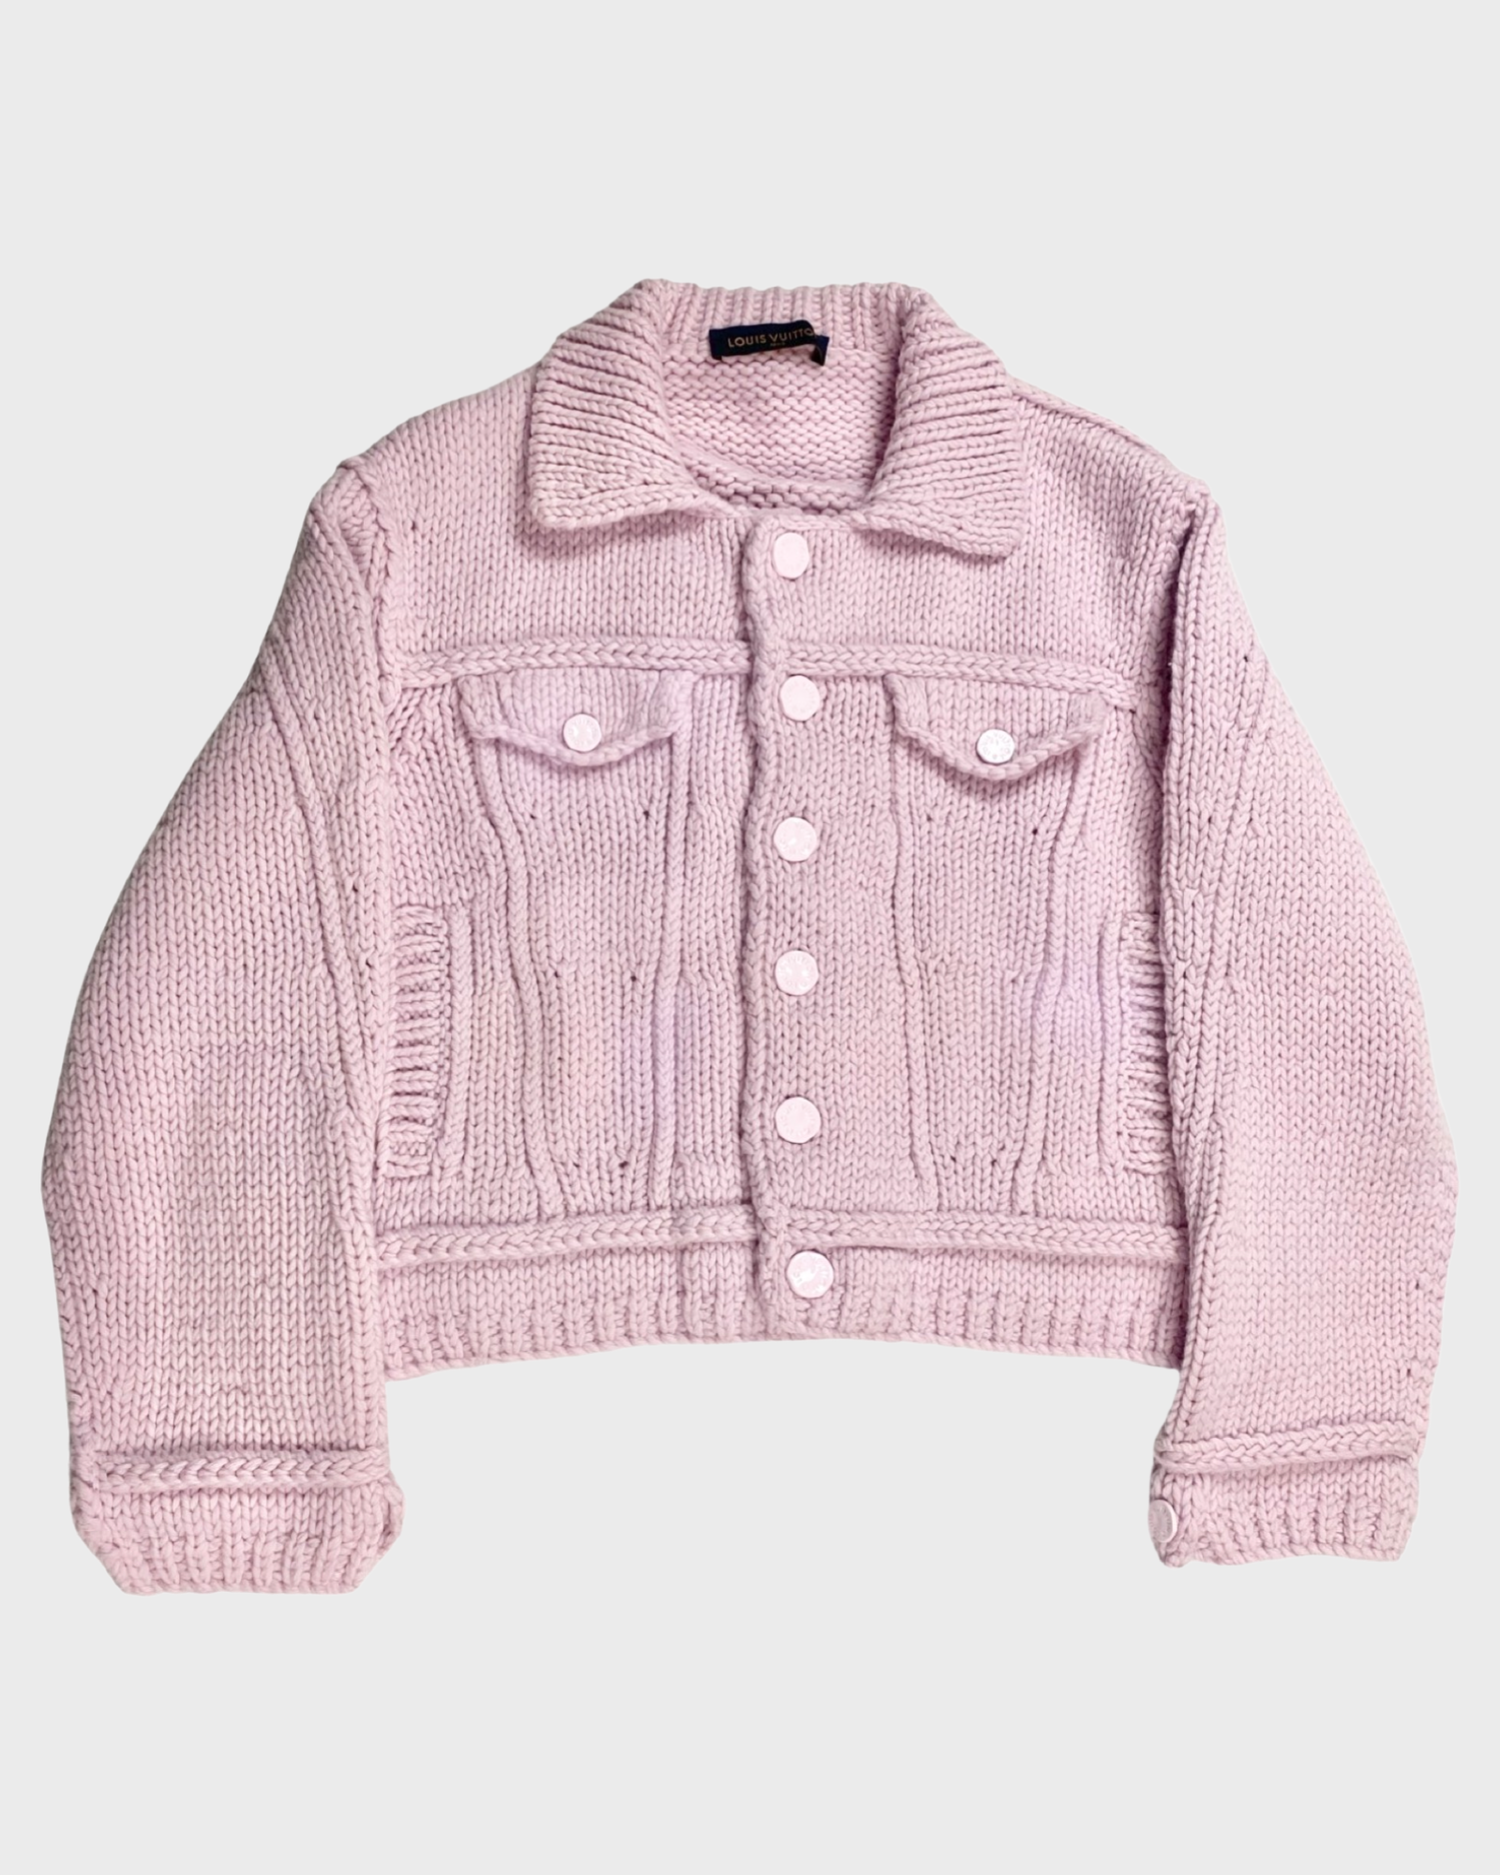 Louis Vuitton Pink/Black Leather Jacket, 38